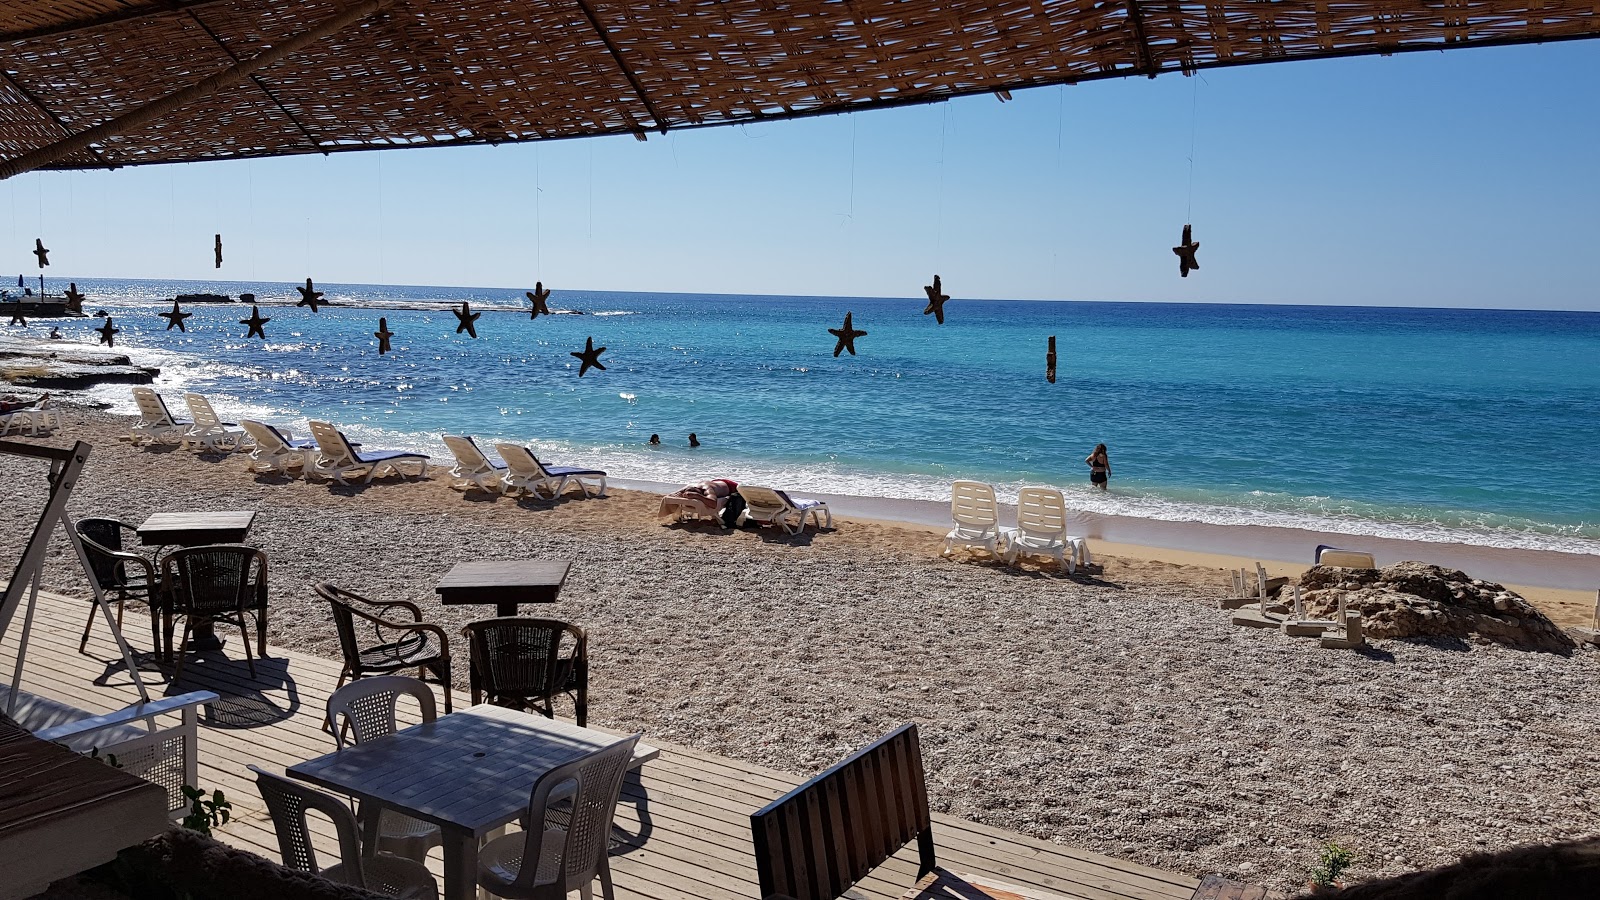 Foto de Bahsa Beach II - lugar popular entre os apreciadores de relaxamento